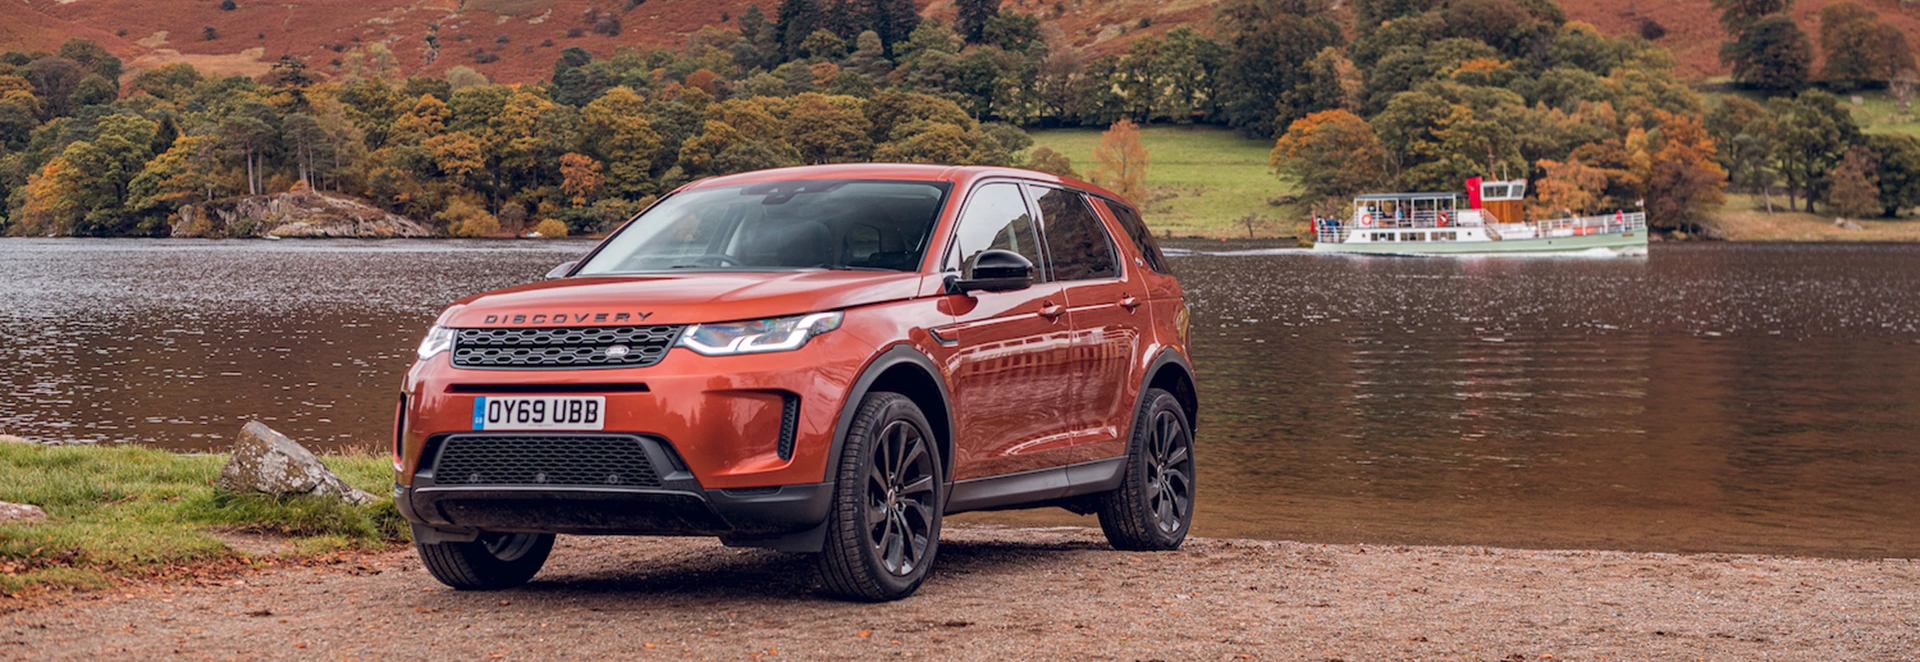 Land Rover Announces Black Friday 2019 Deals Car Keys